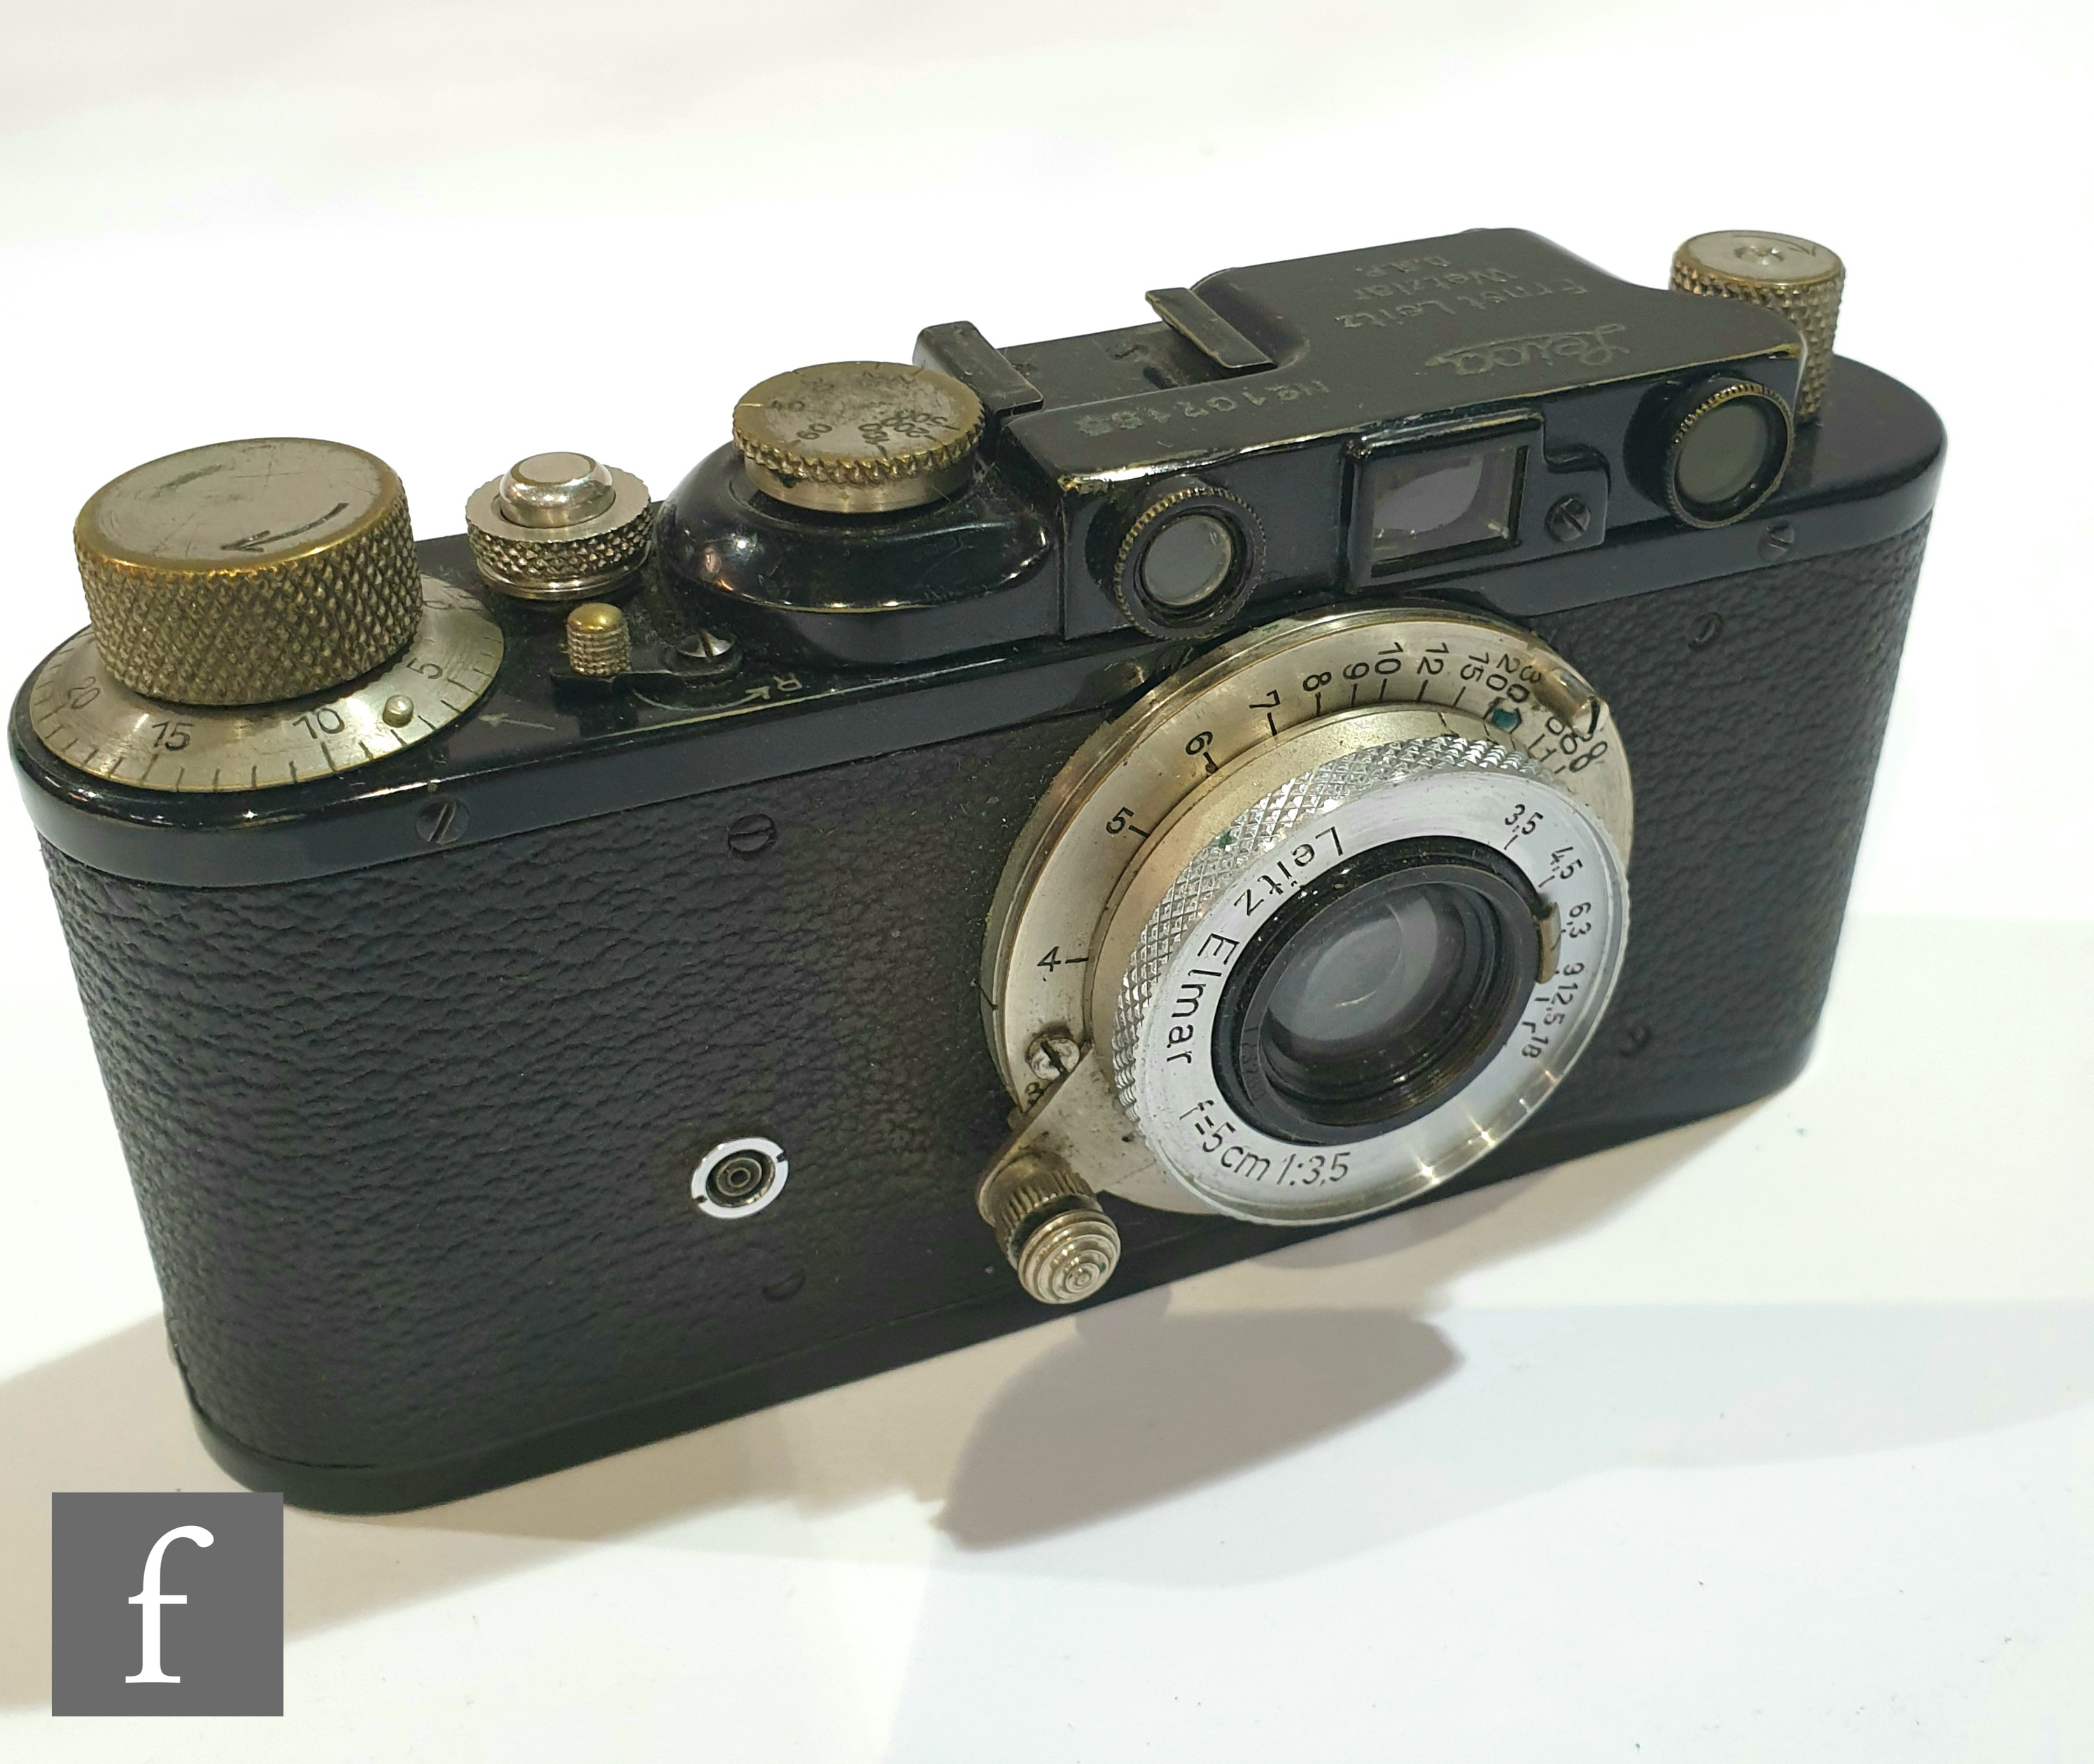 A Leica II rangefinder camera, circa 1933, black case, serial number 107155, with Leitz Elmar f=